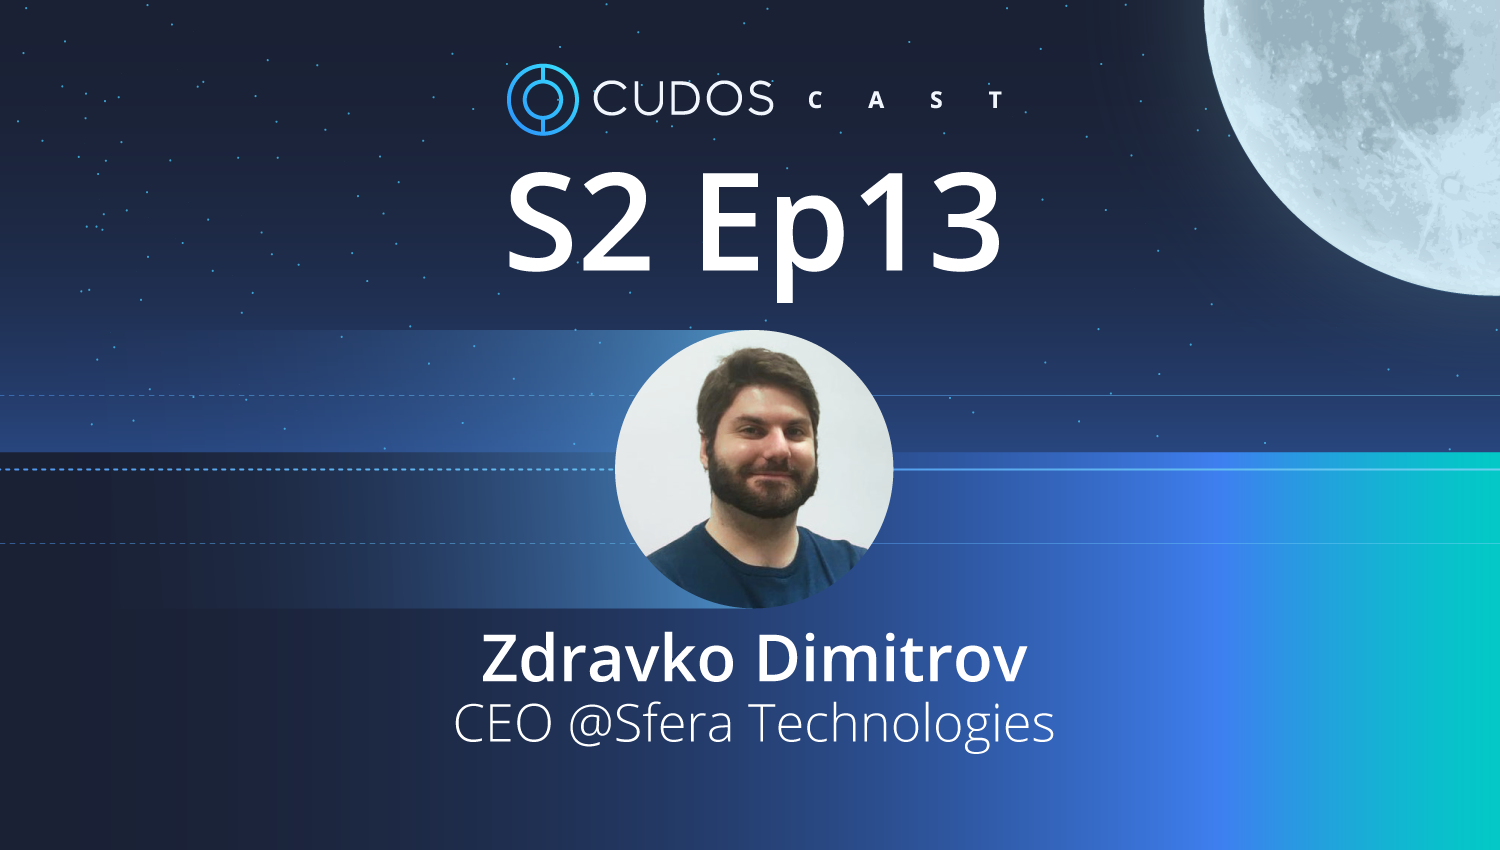 Next on CudosCast: Zdravko Dimitrov, CEO, Sfera Technologies